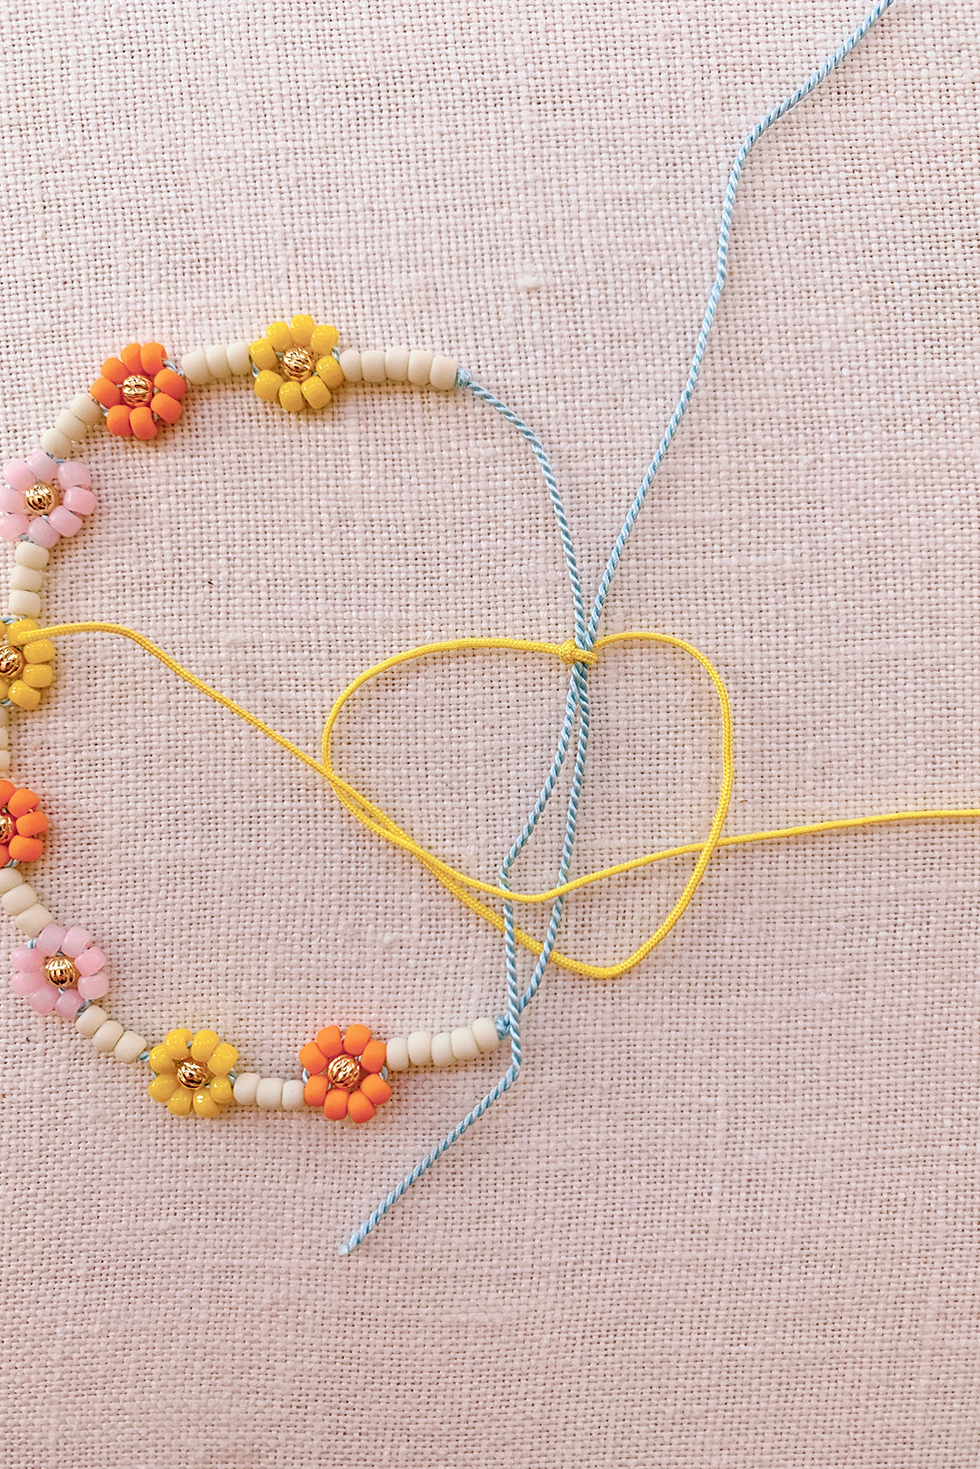 How to make a flower friendship bracelet: daisy chain pattern